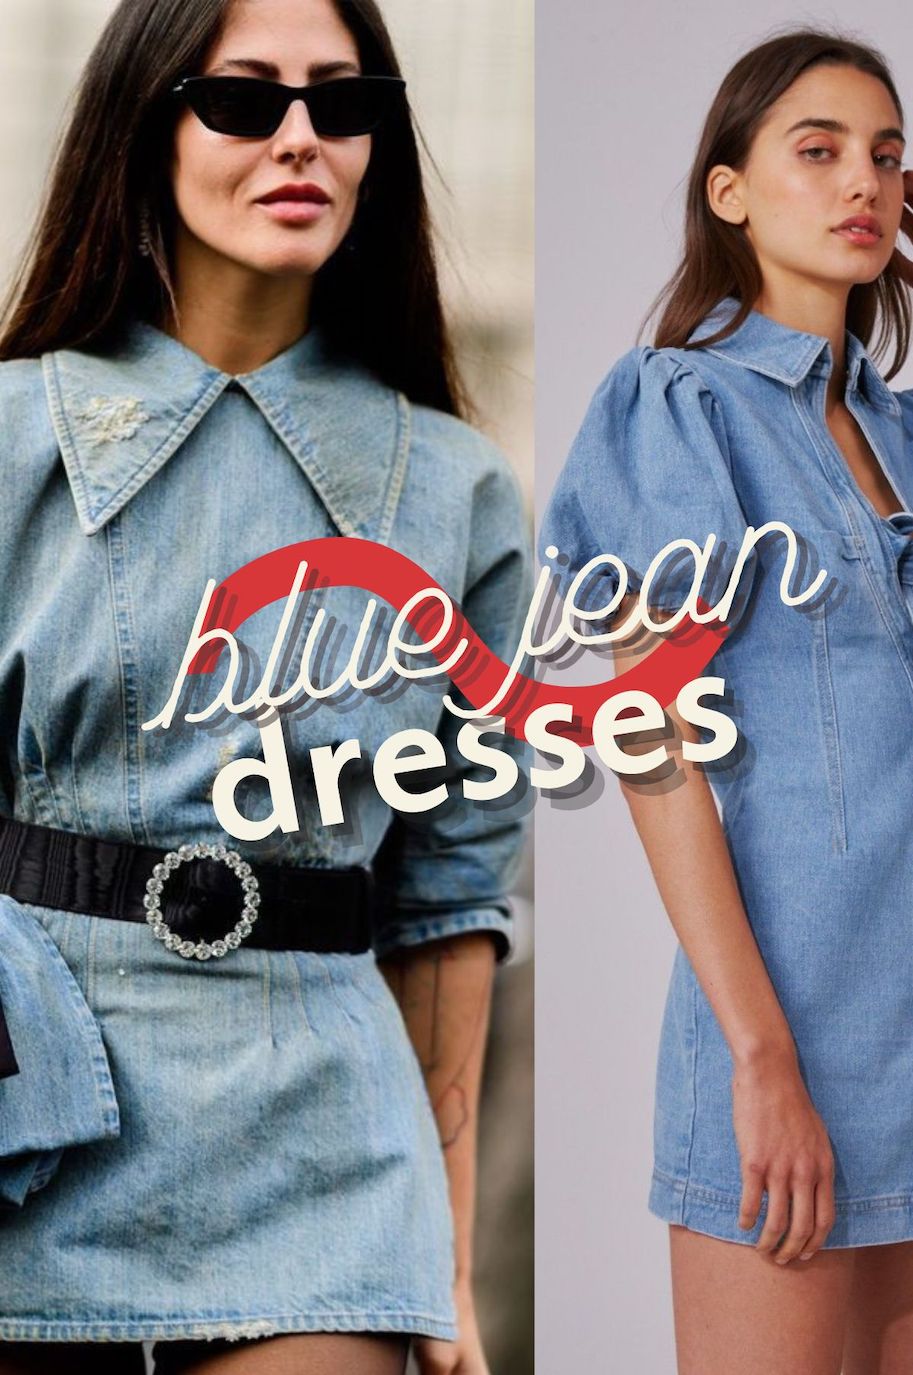 Two blue jean dresses